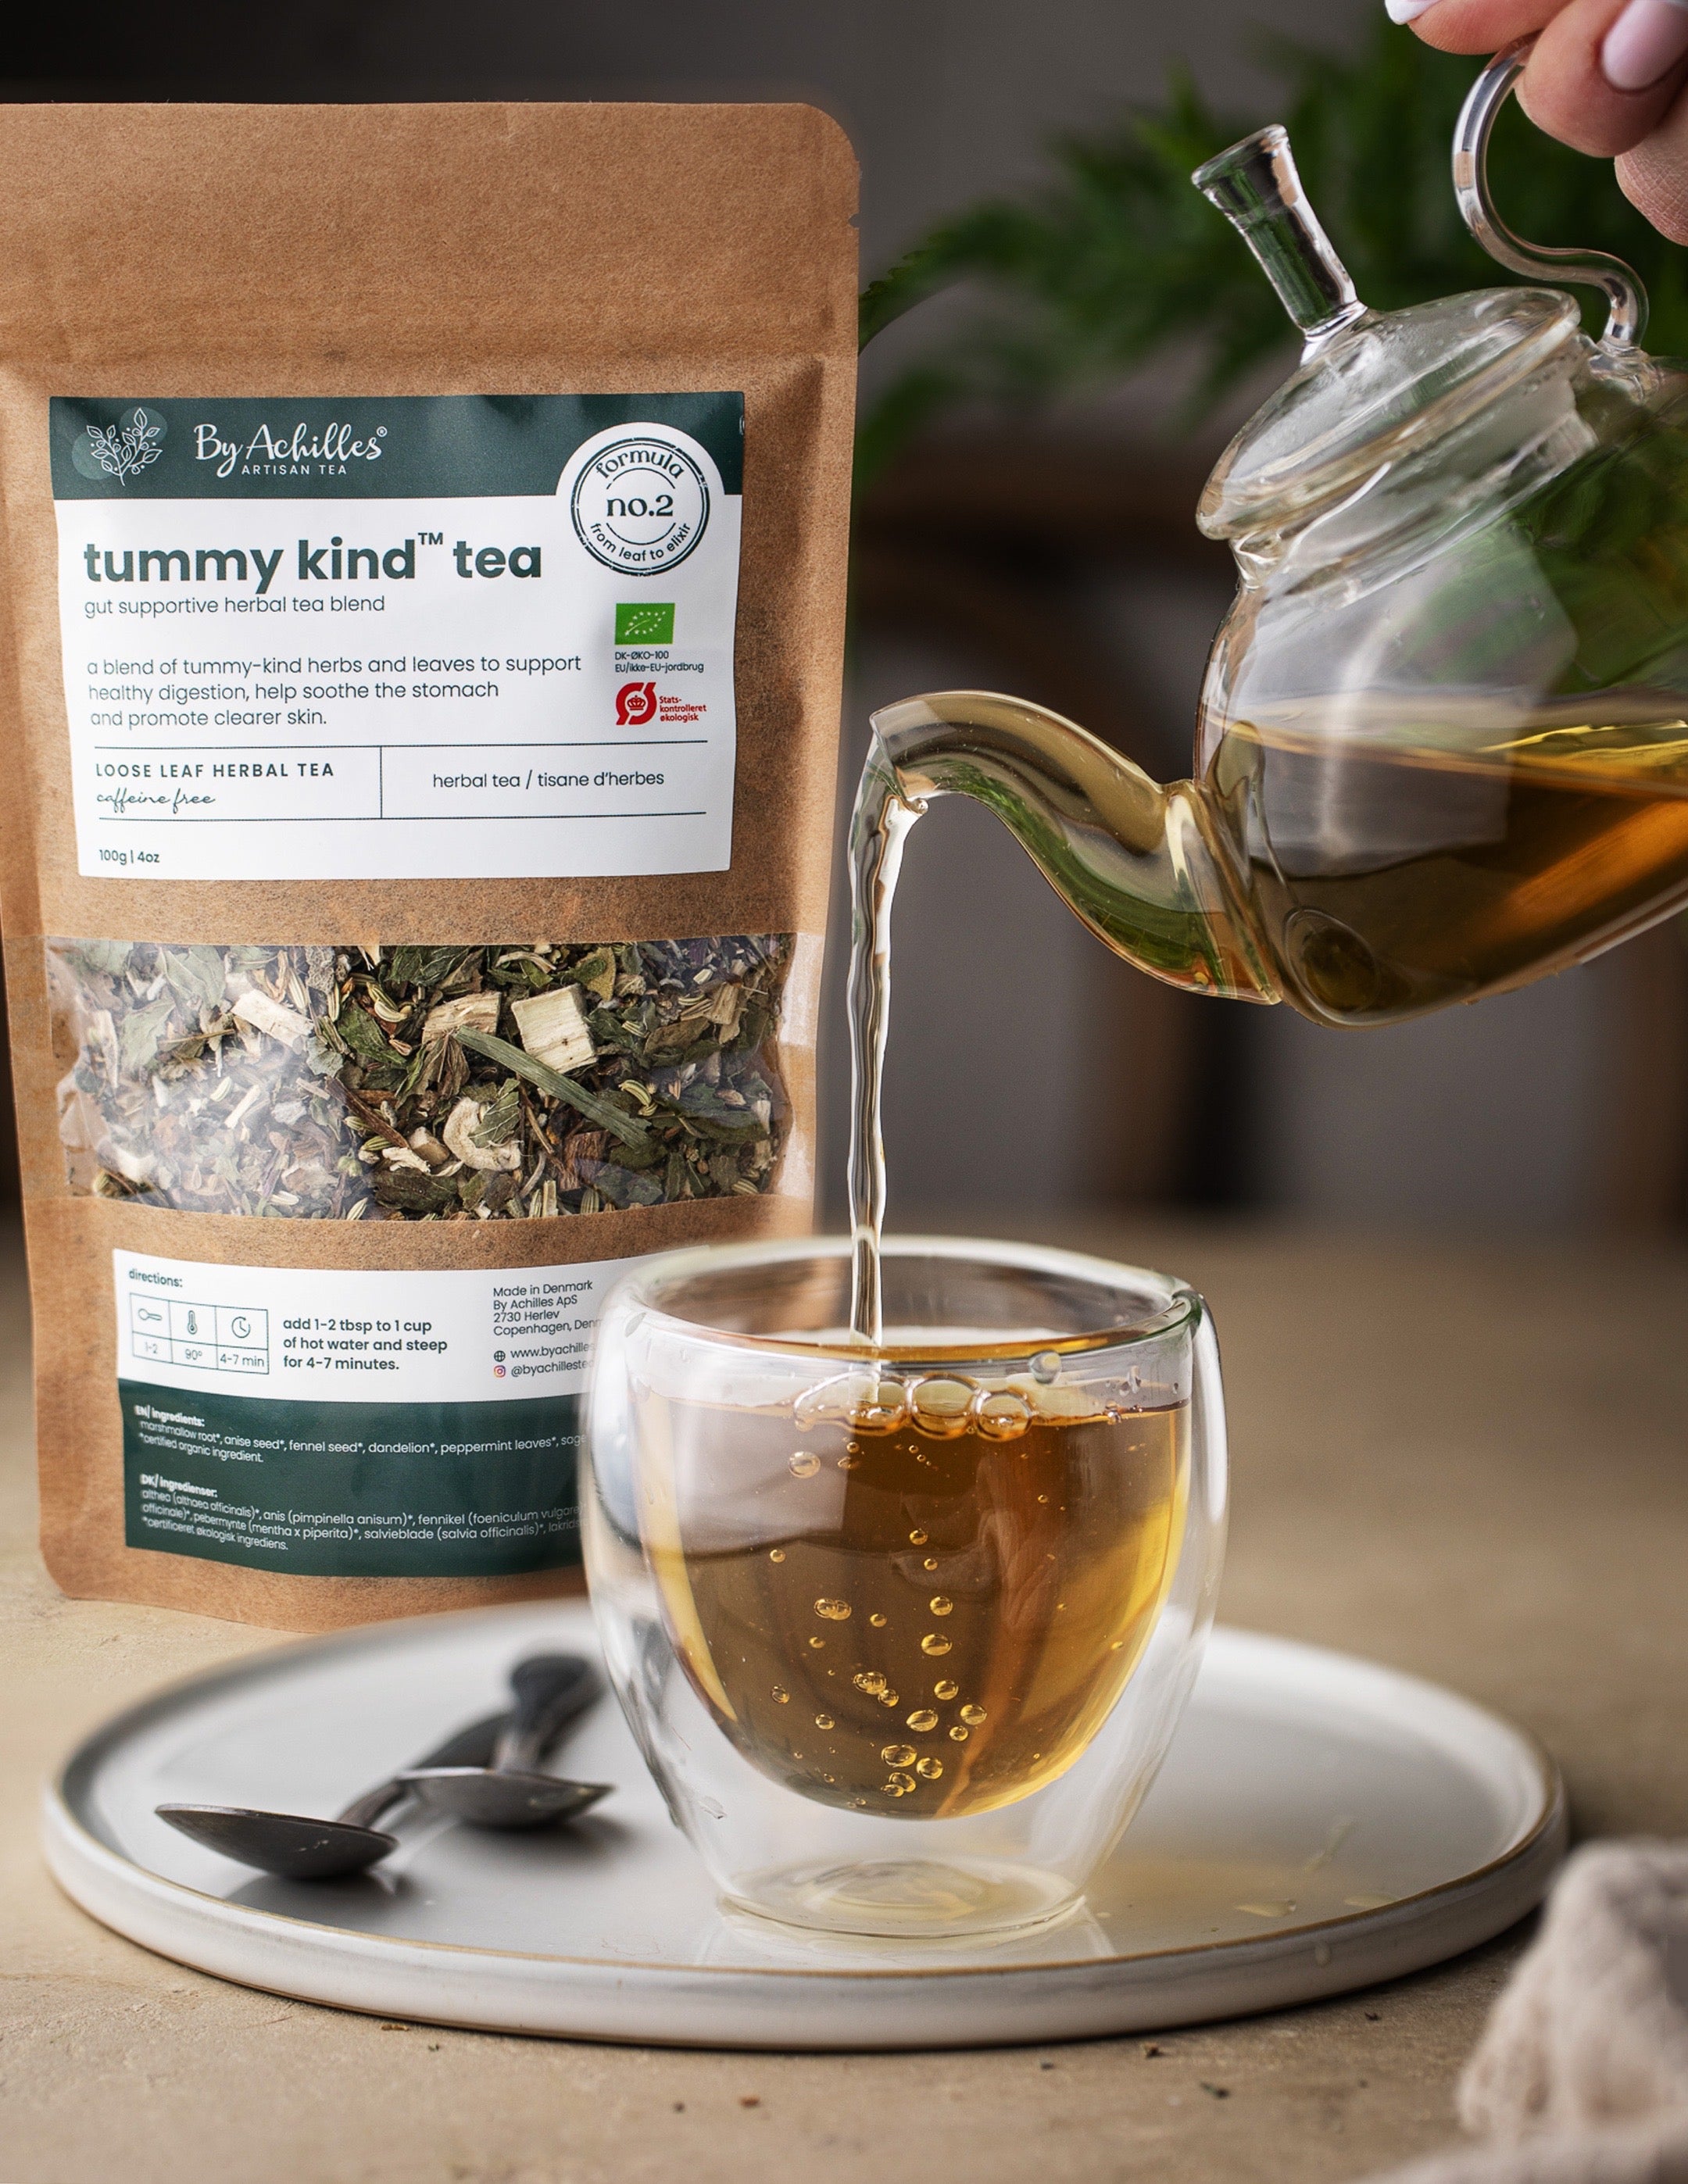 the tummy kind tea